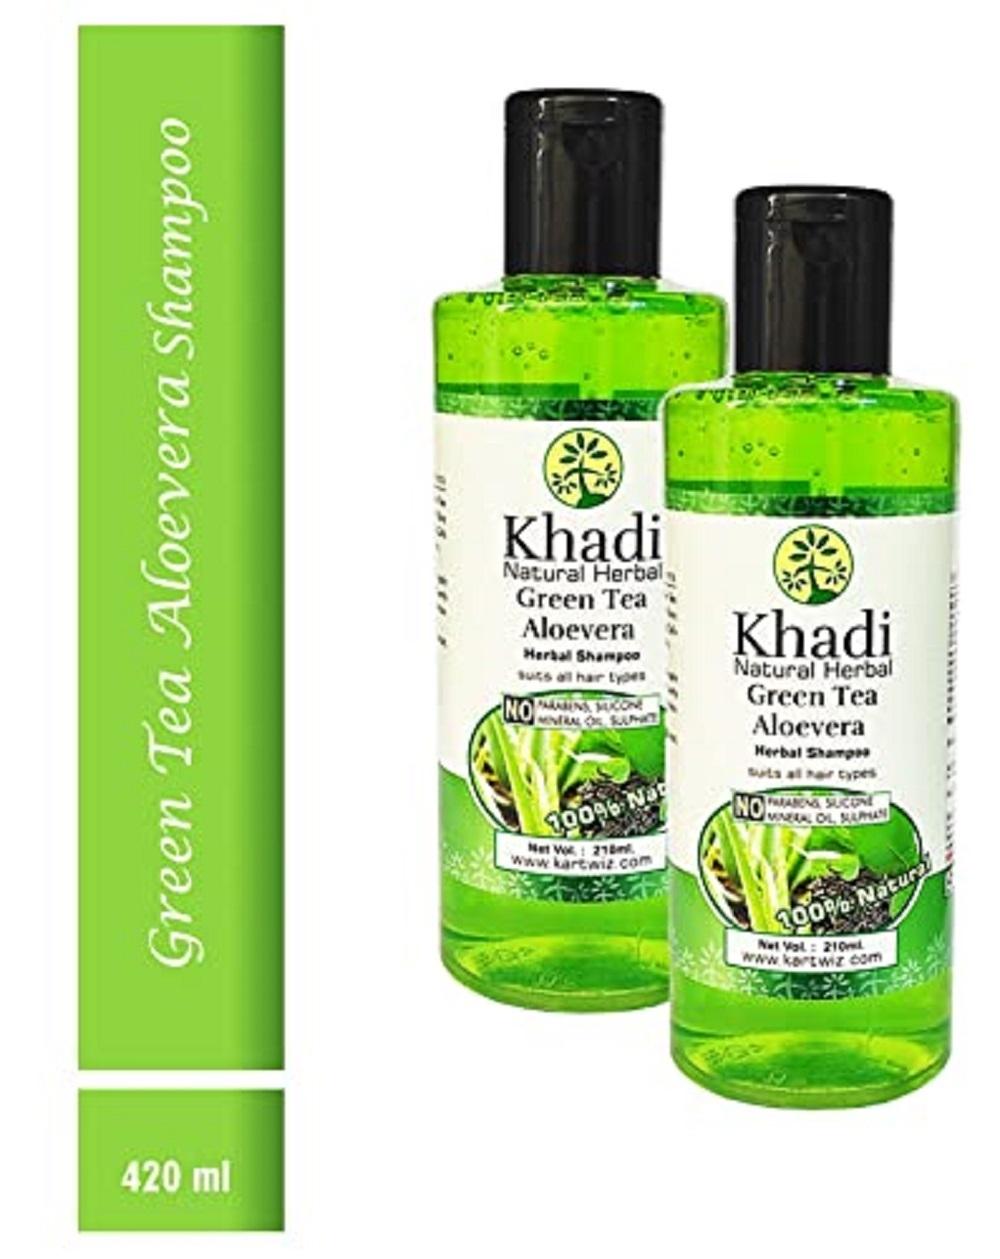 Khadi Natural Herbal Green Tea Aloevera Shampoo For Hair Growth| Repair  Damage Hair| Shiny And Strong Hair| 210ml Pack of 2 - JioMart